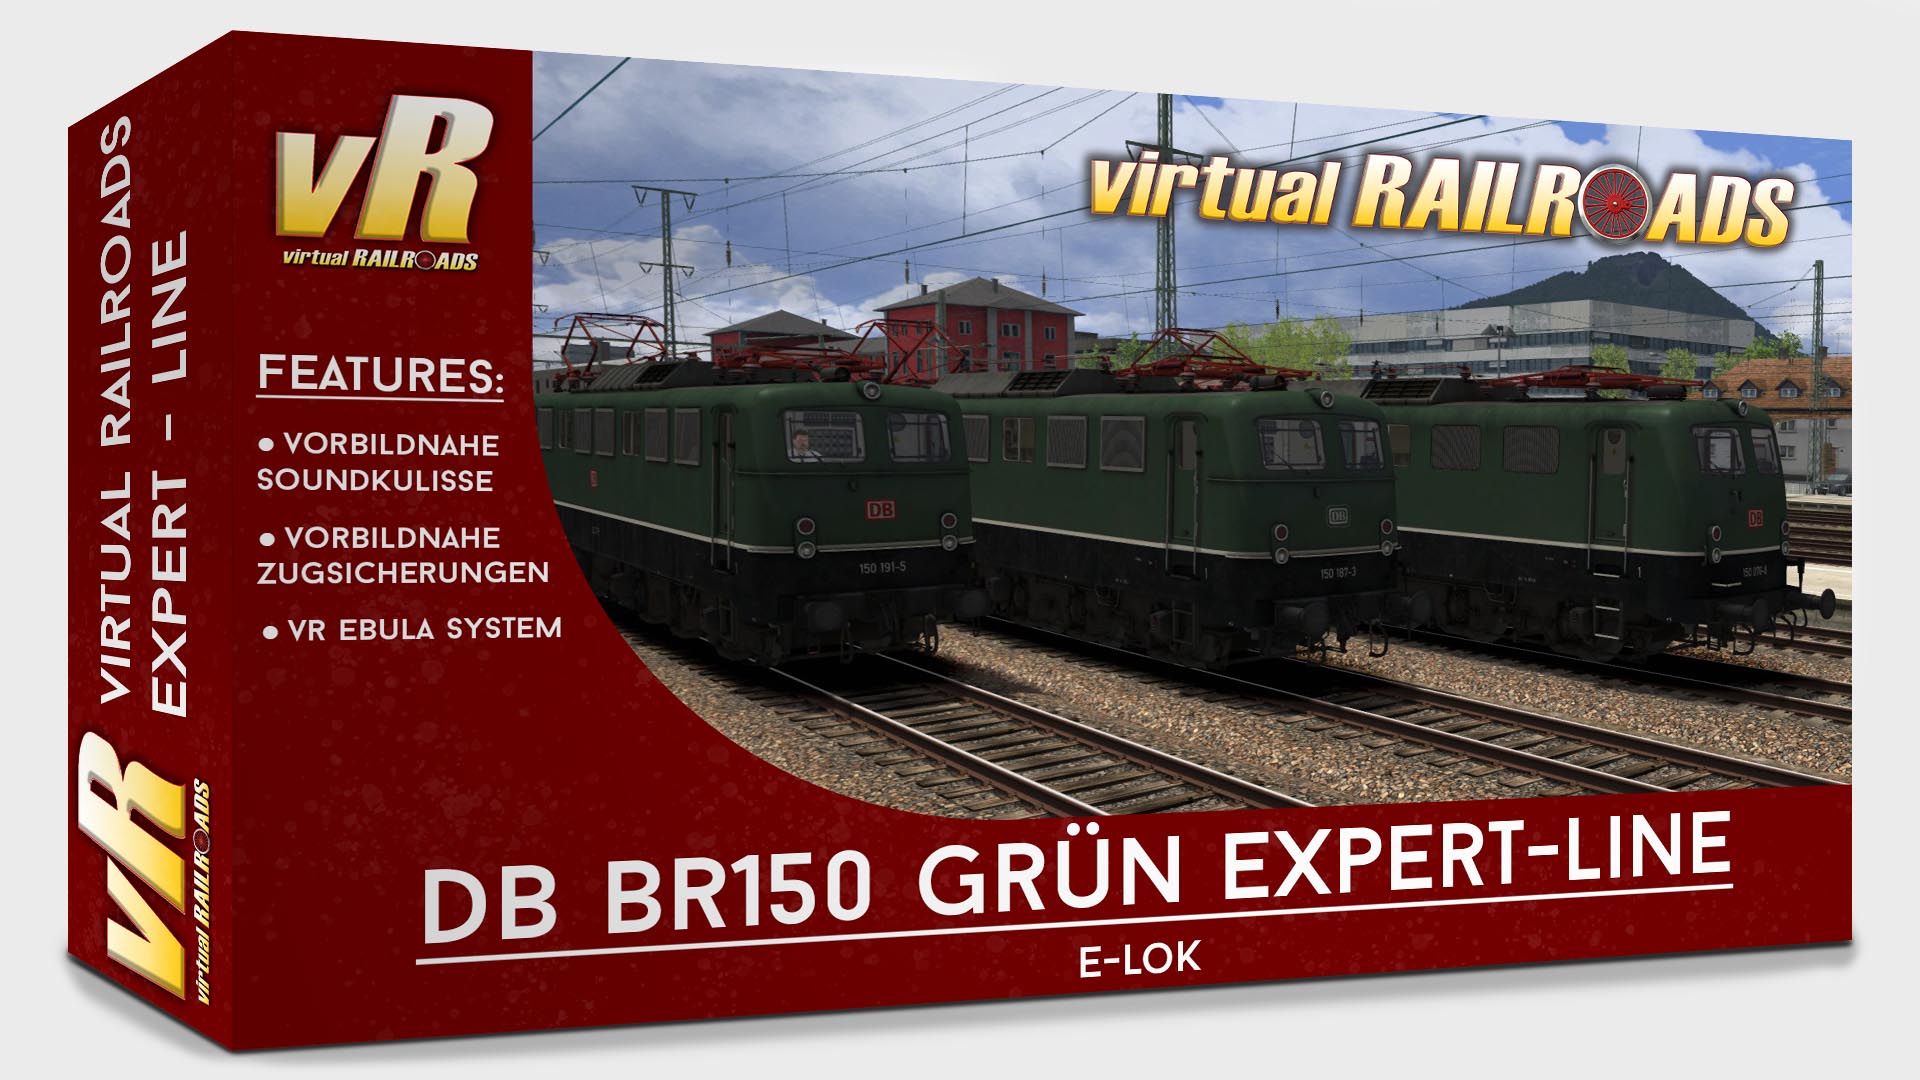 DB BR150 Green Expert Line